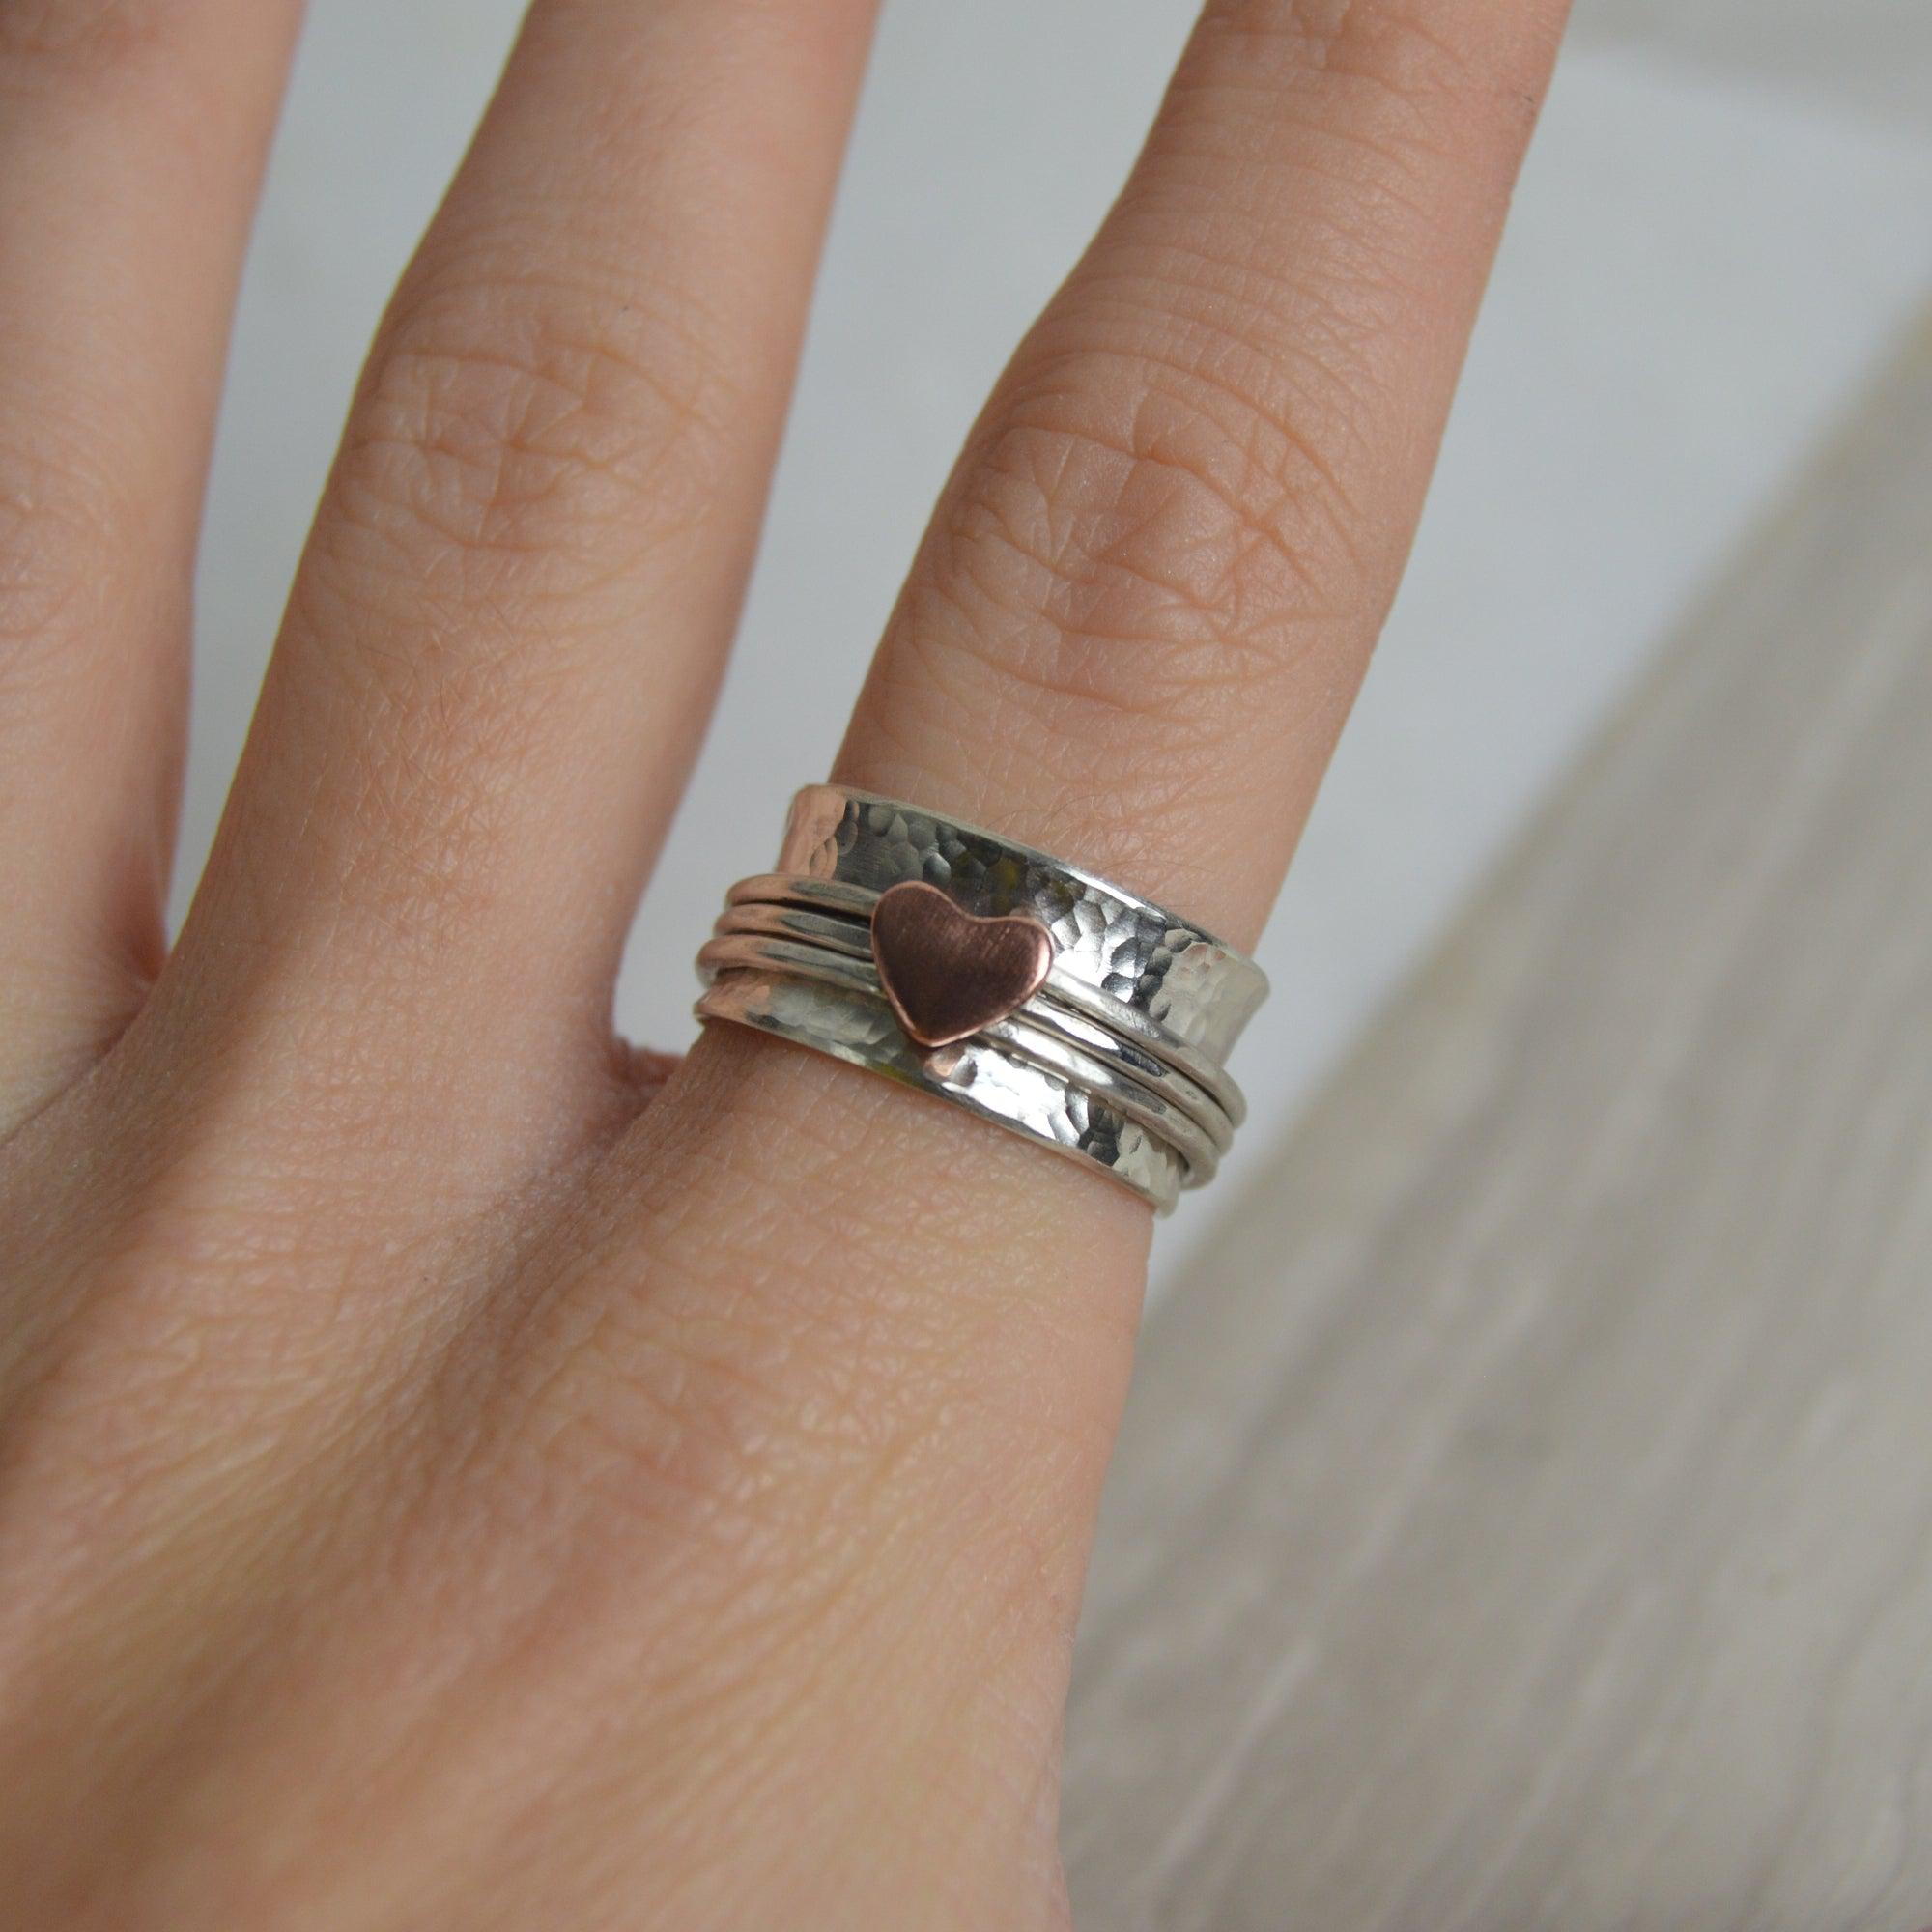 Copper Heart Spinning Ring - The Nancy Smillie Shop - Art, Jewellery & Designer Gifts Glasgow